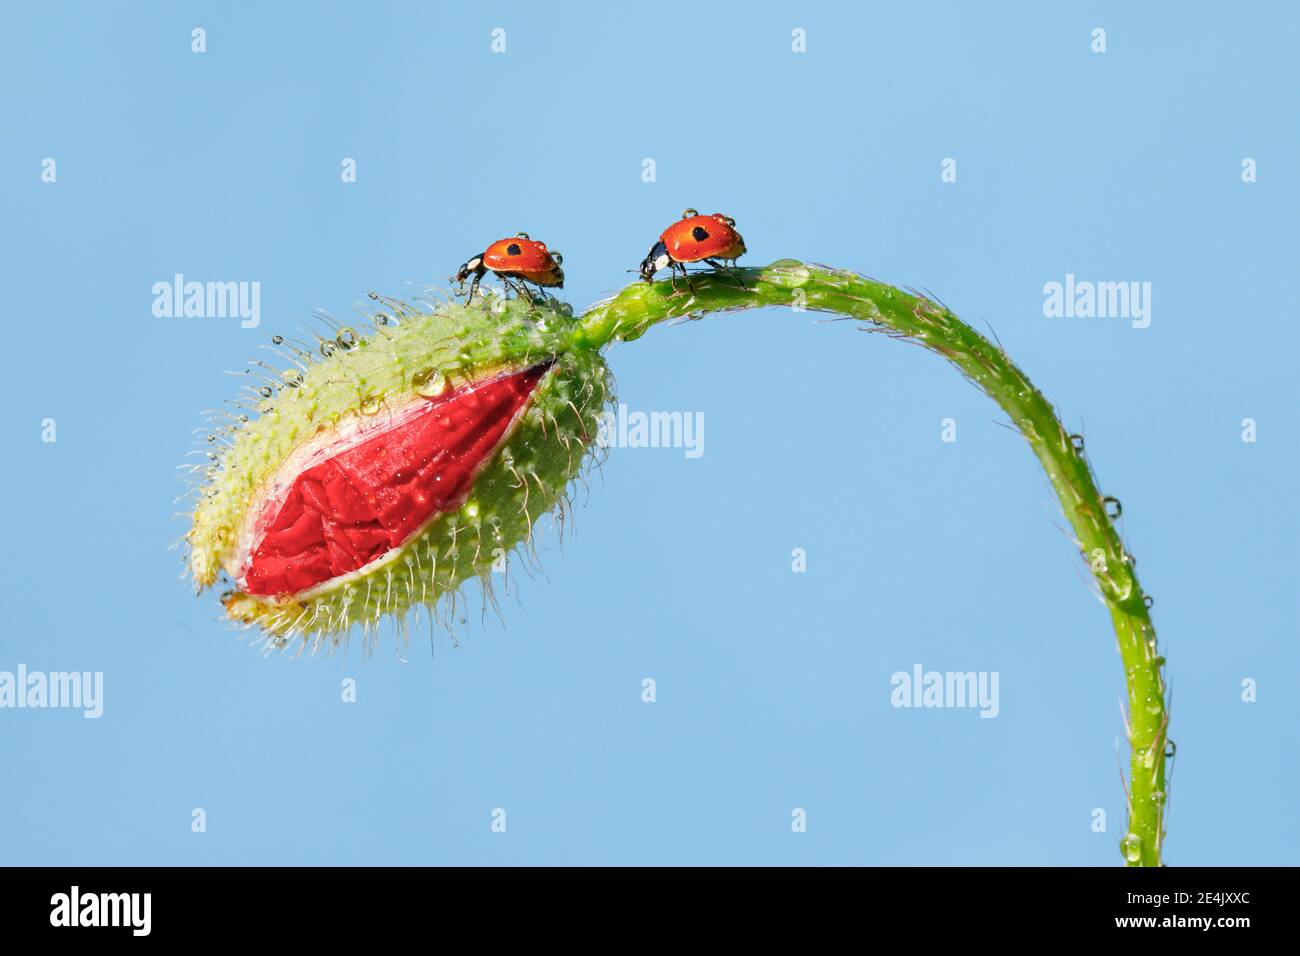 Two-spotted ladybird on poppy flower, Switzerland Stock Photo